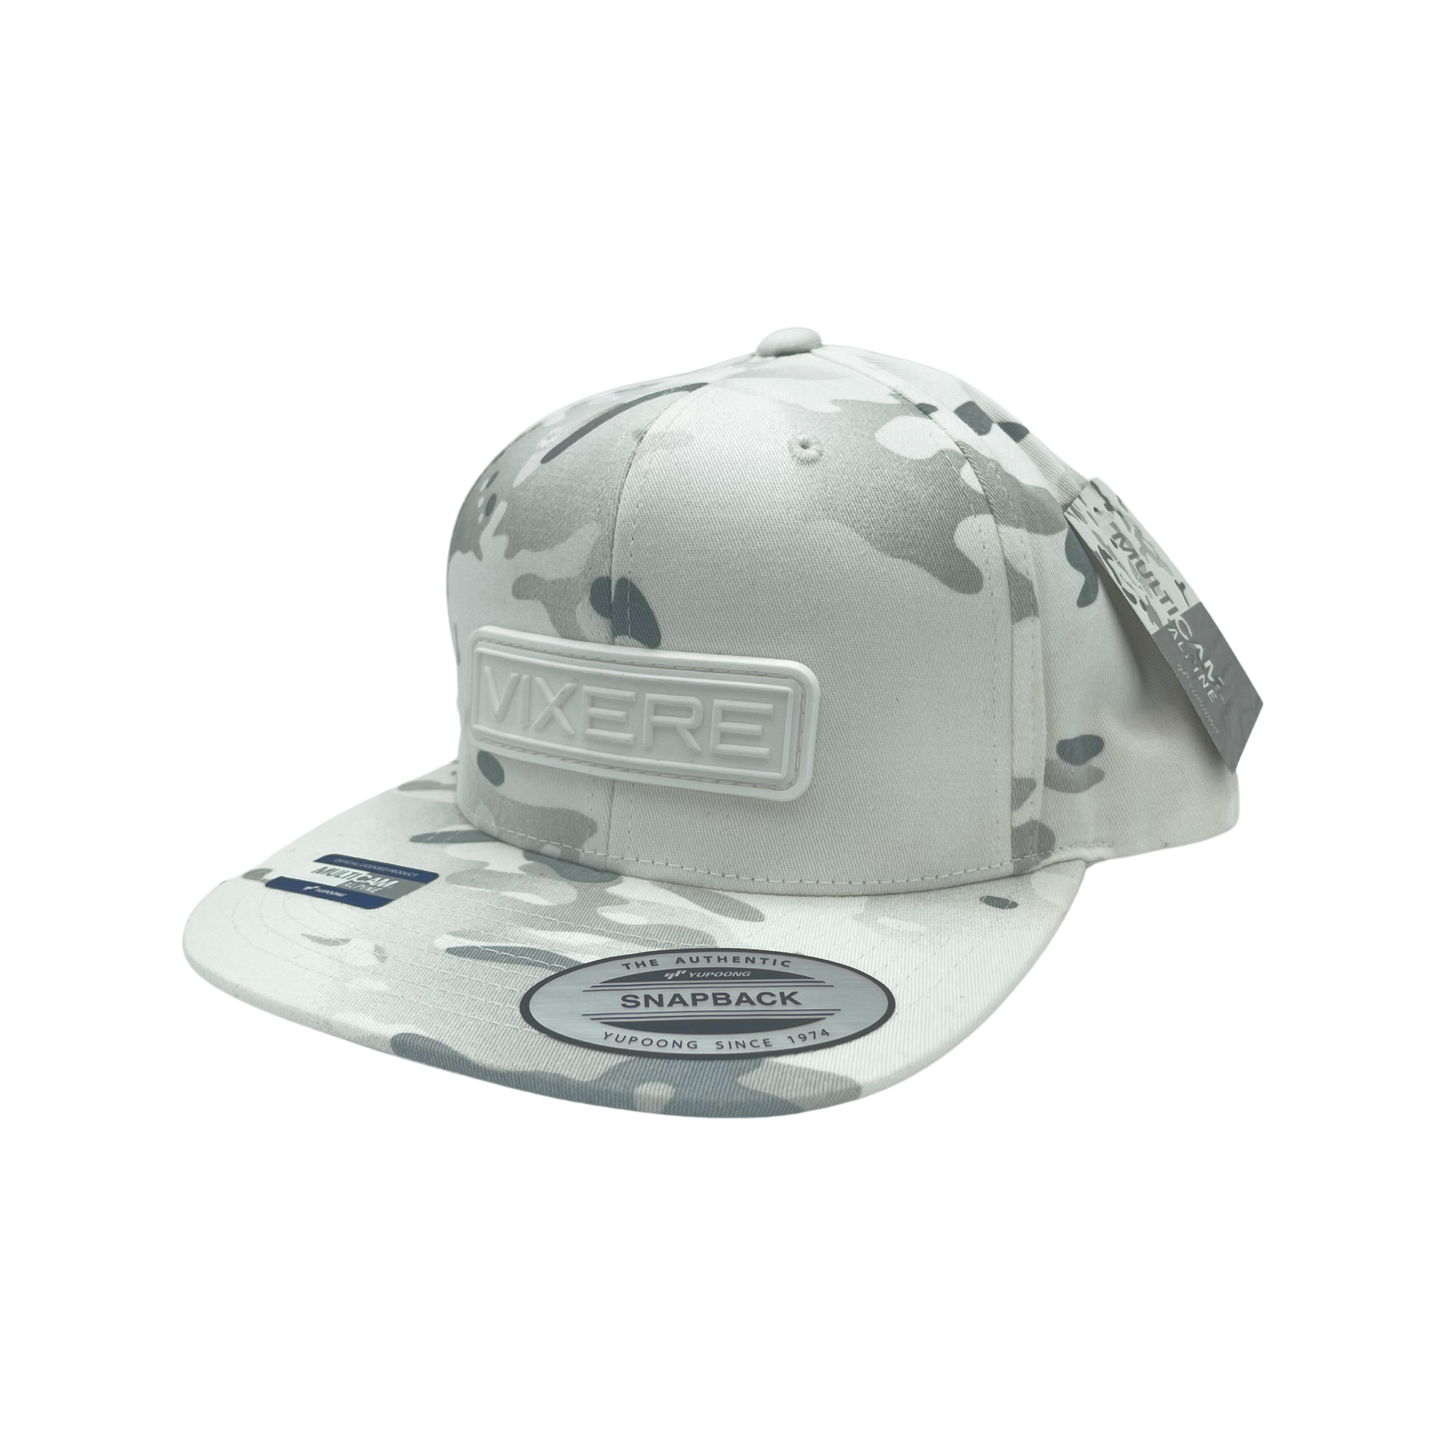 Limited Edition Vixere Ghost Alpine Multicam Hat